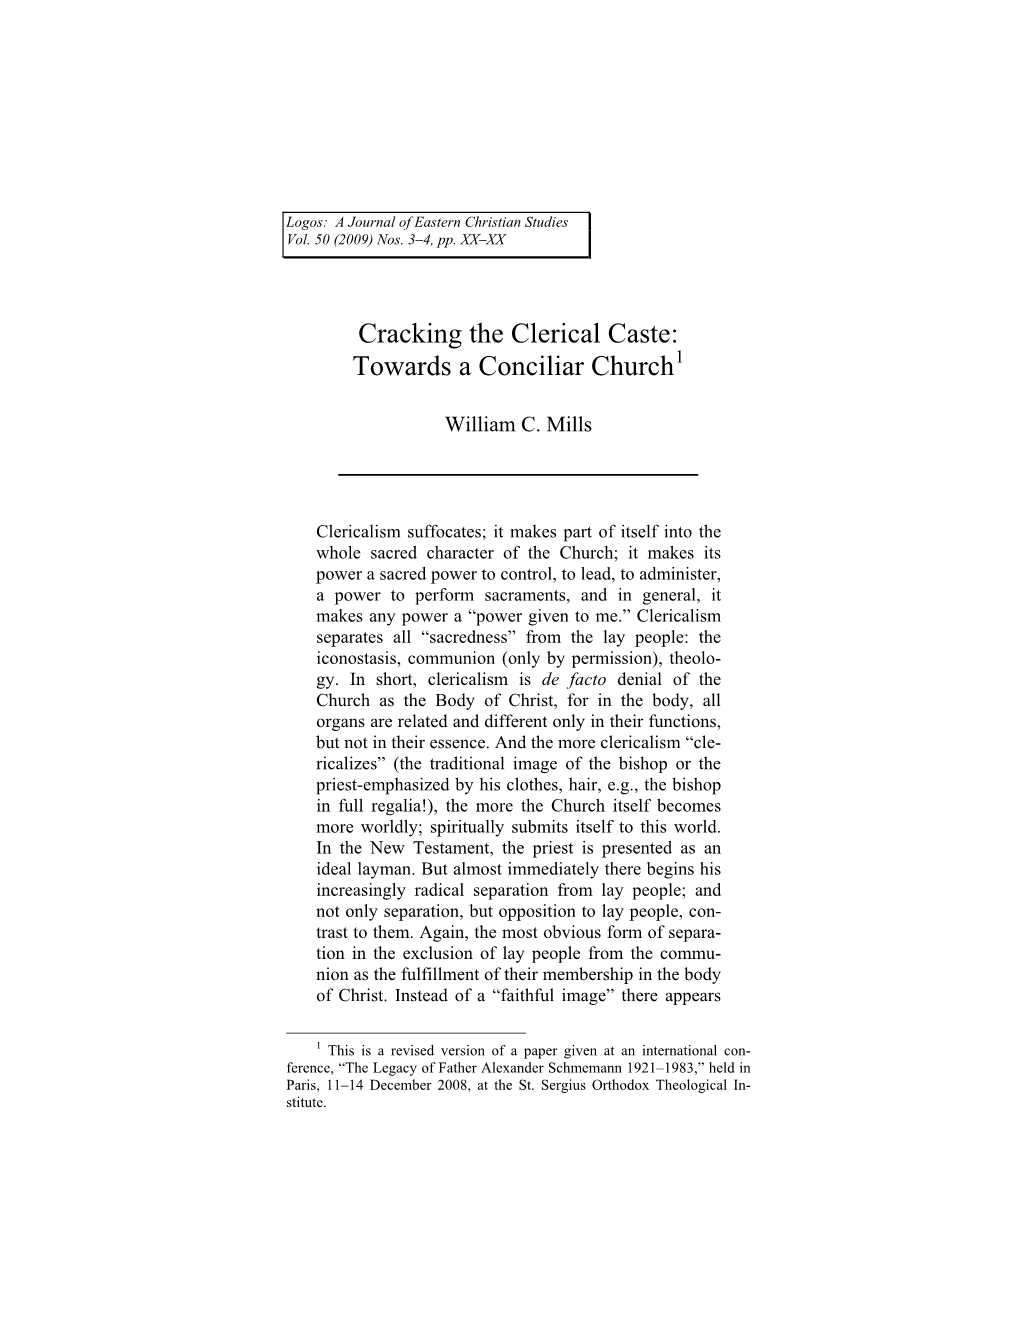 Cracking the Clerical Caste: Towards a Conciliar Church1